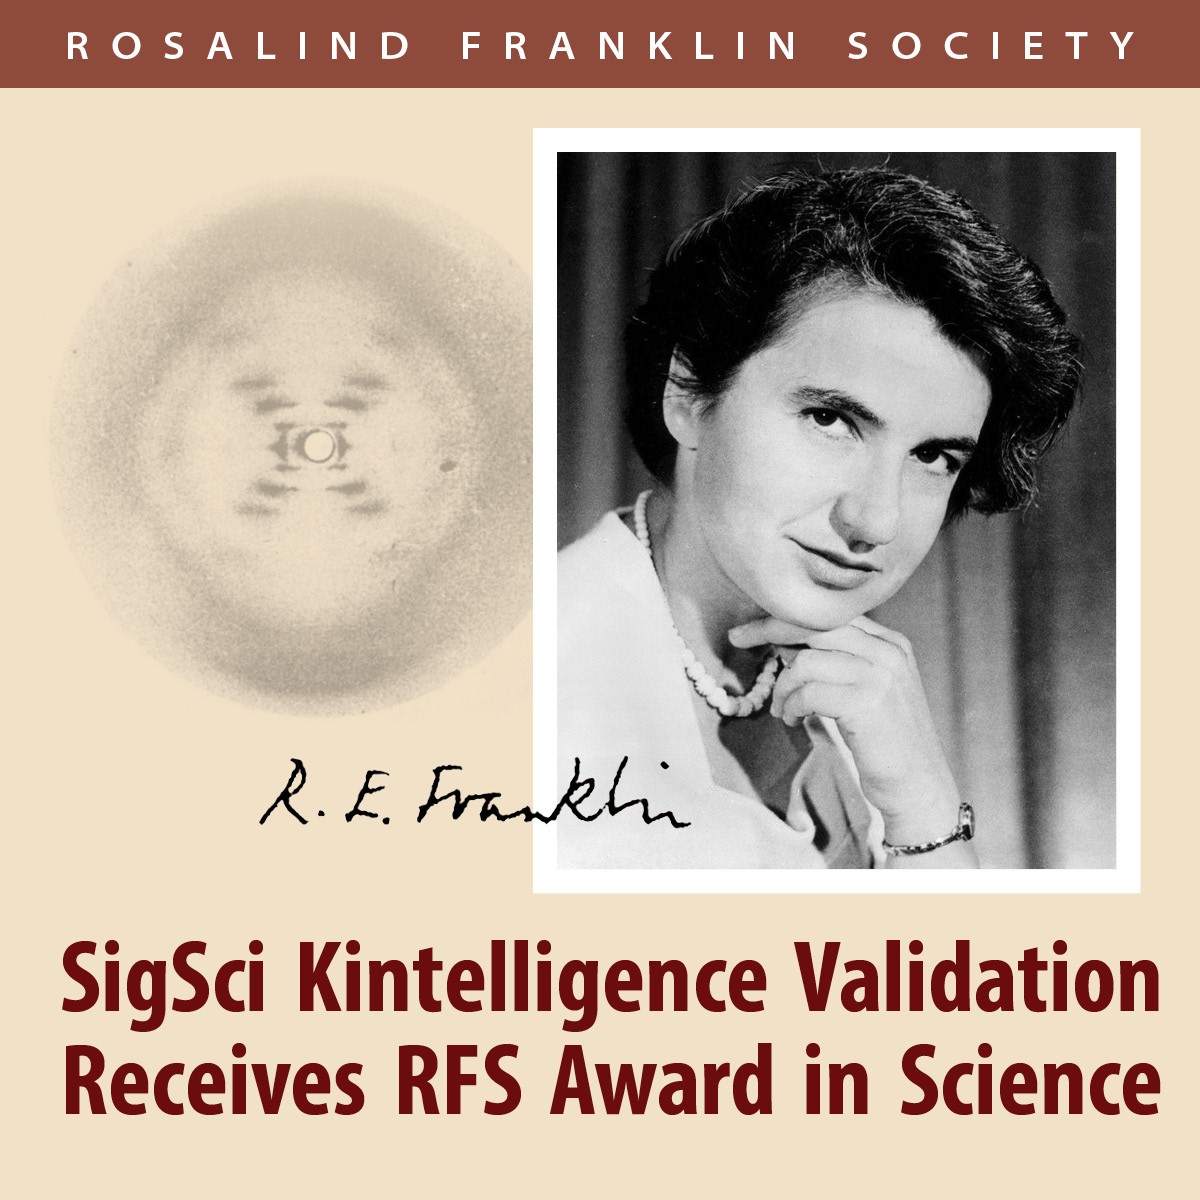 Rosalind Franklin Award Sigsci kintelligence validation receives RFS Award in science. Image of woman, Rosalind Franklin, and early image of DNA Double Helix